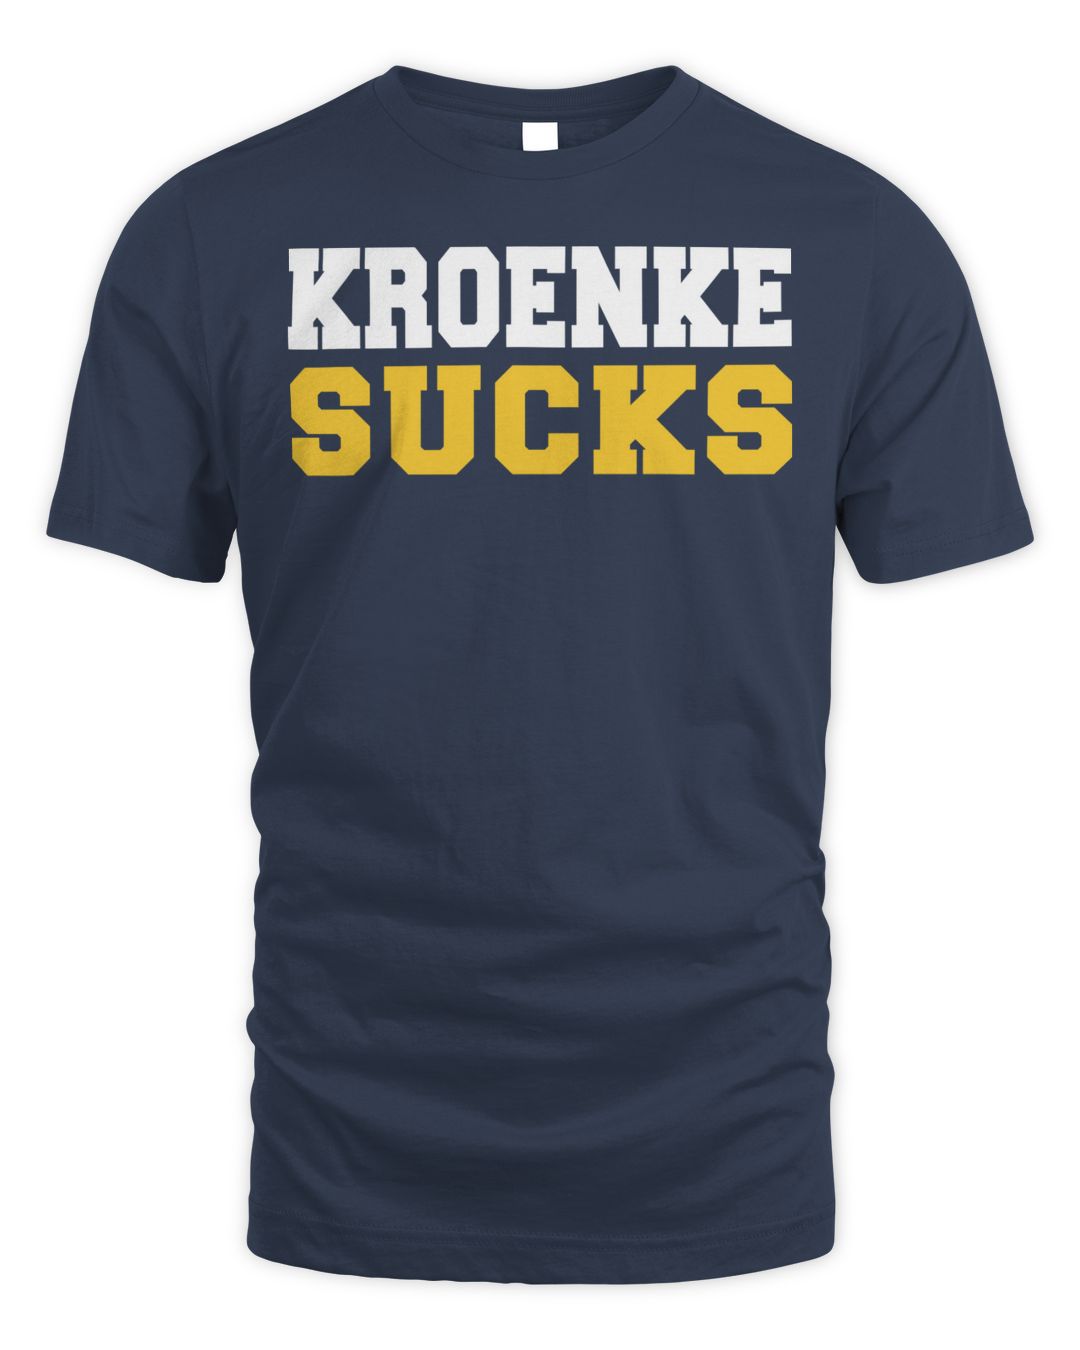 Kroenke Sucks Structured Shirt